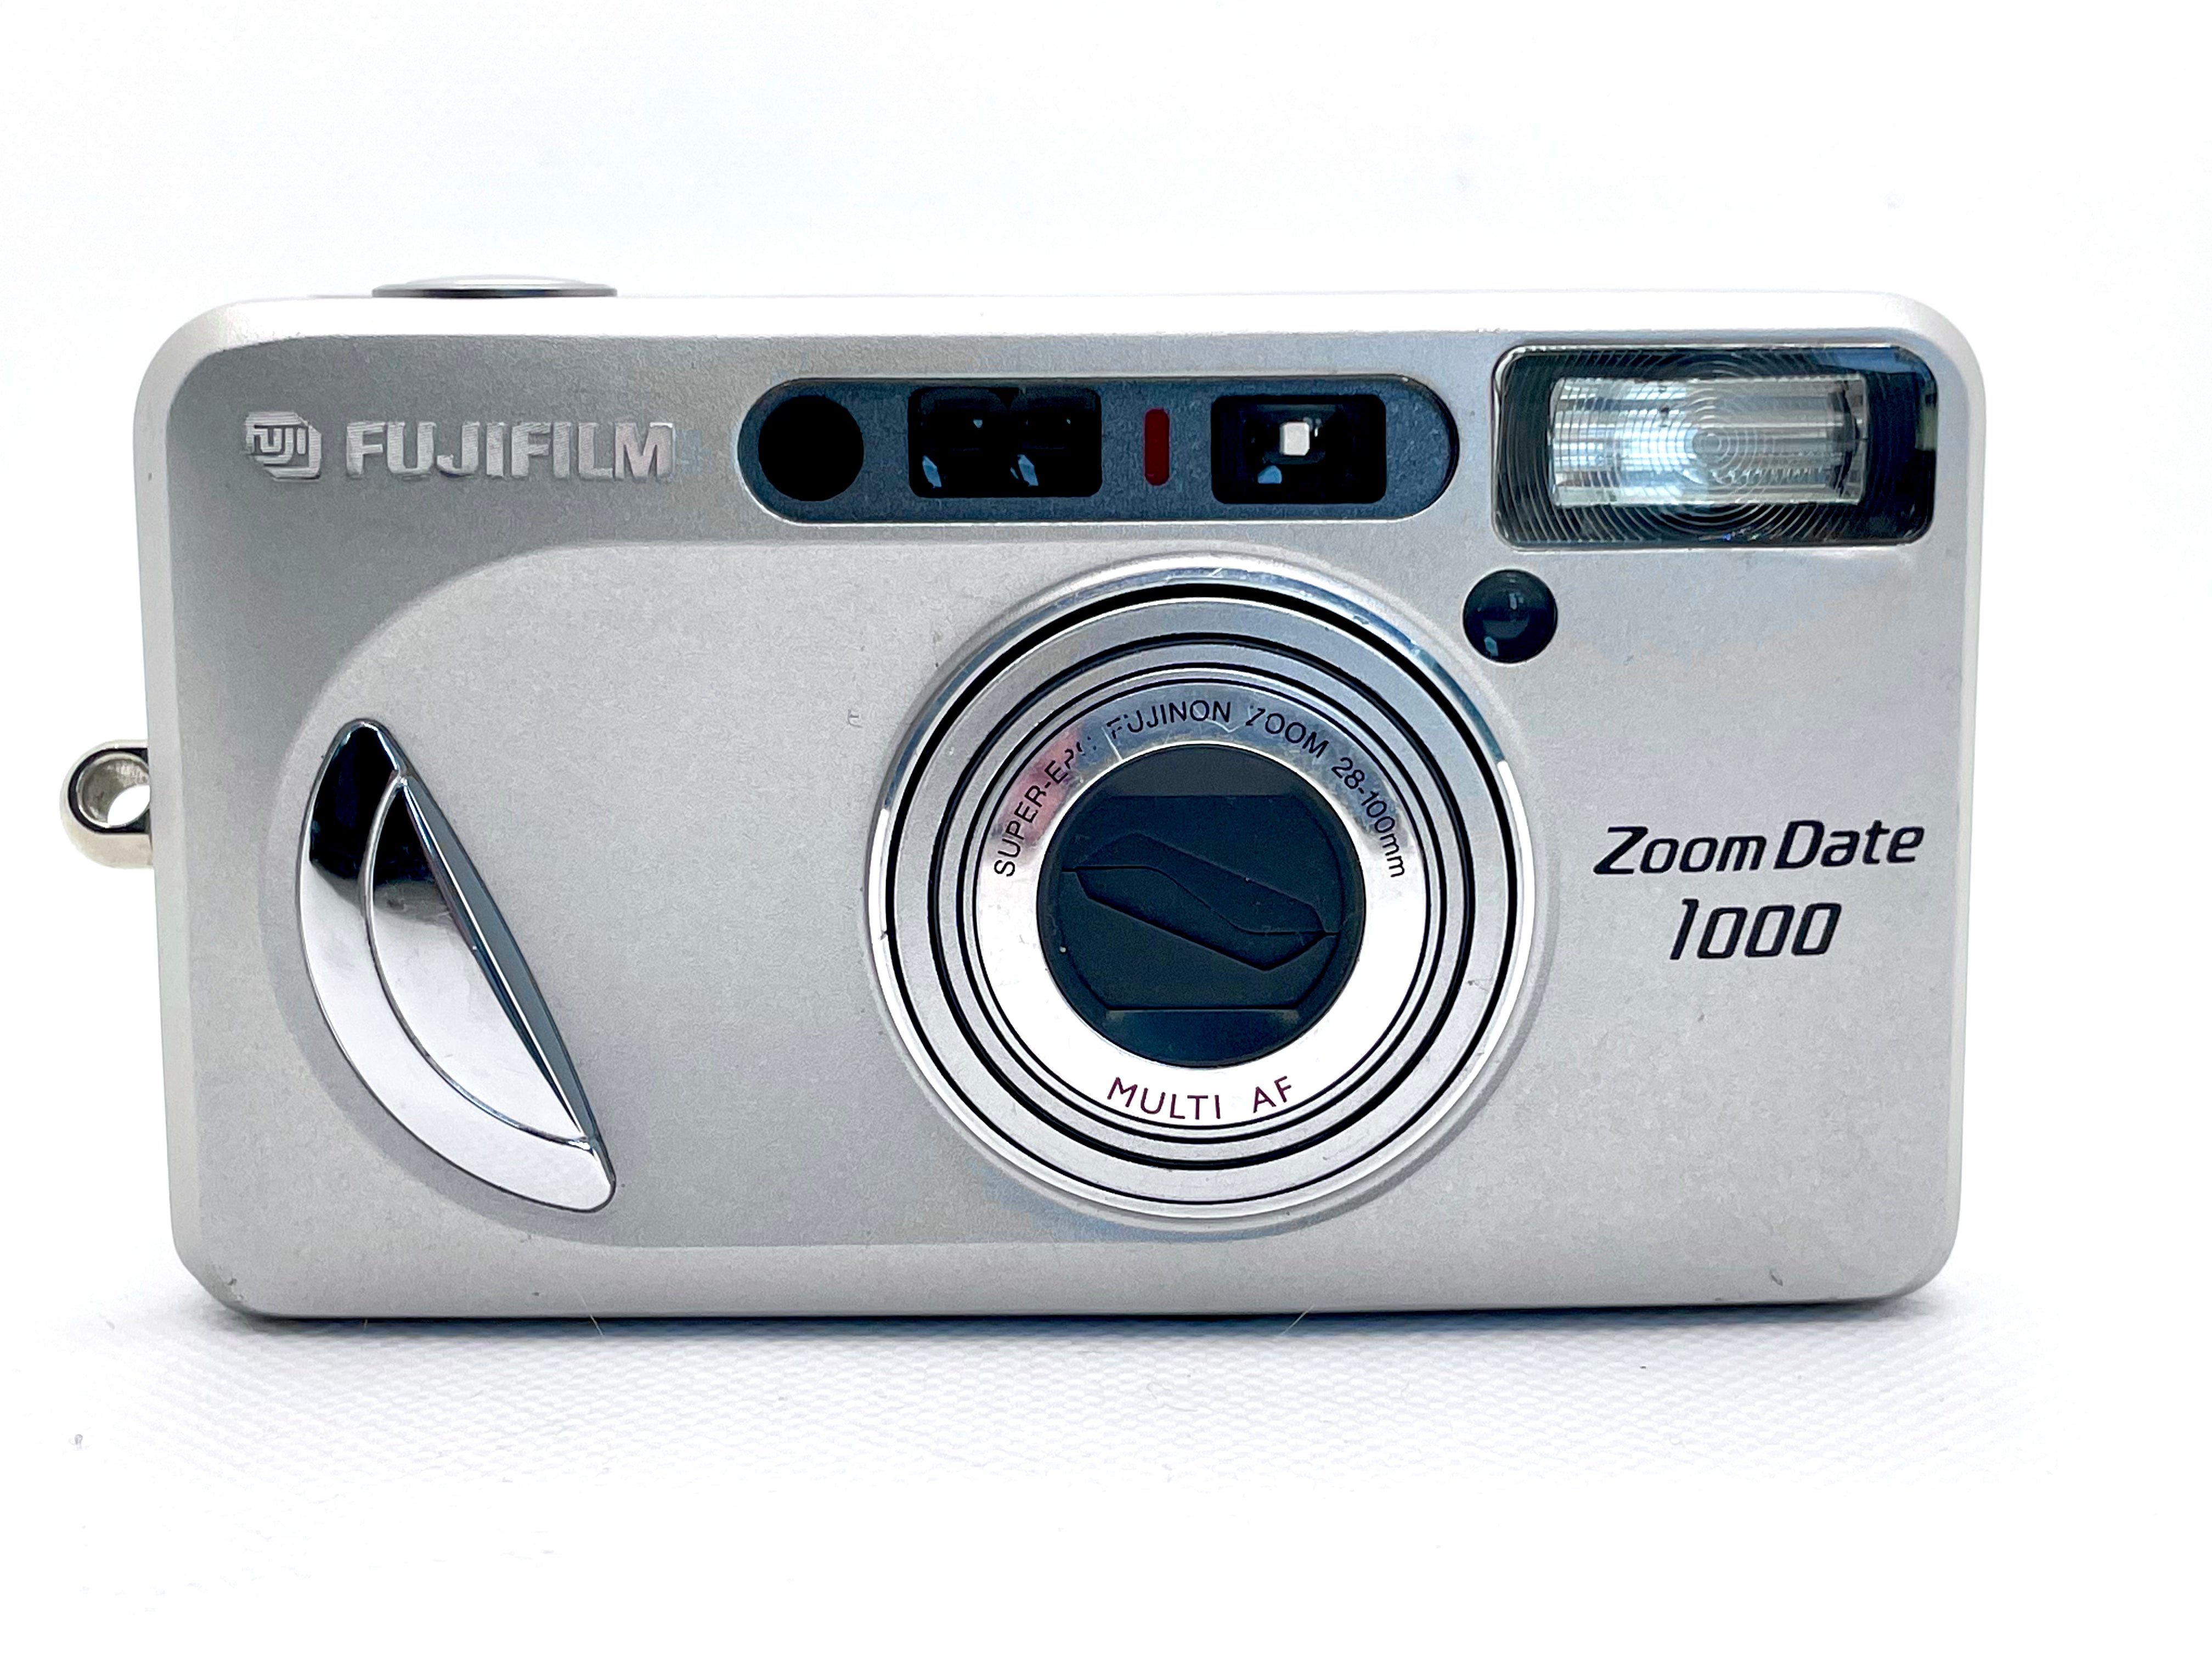 Fujifilm Zoom Date 1000